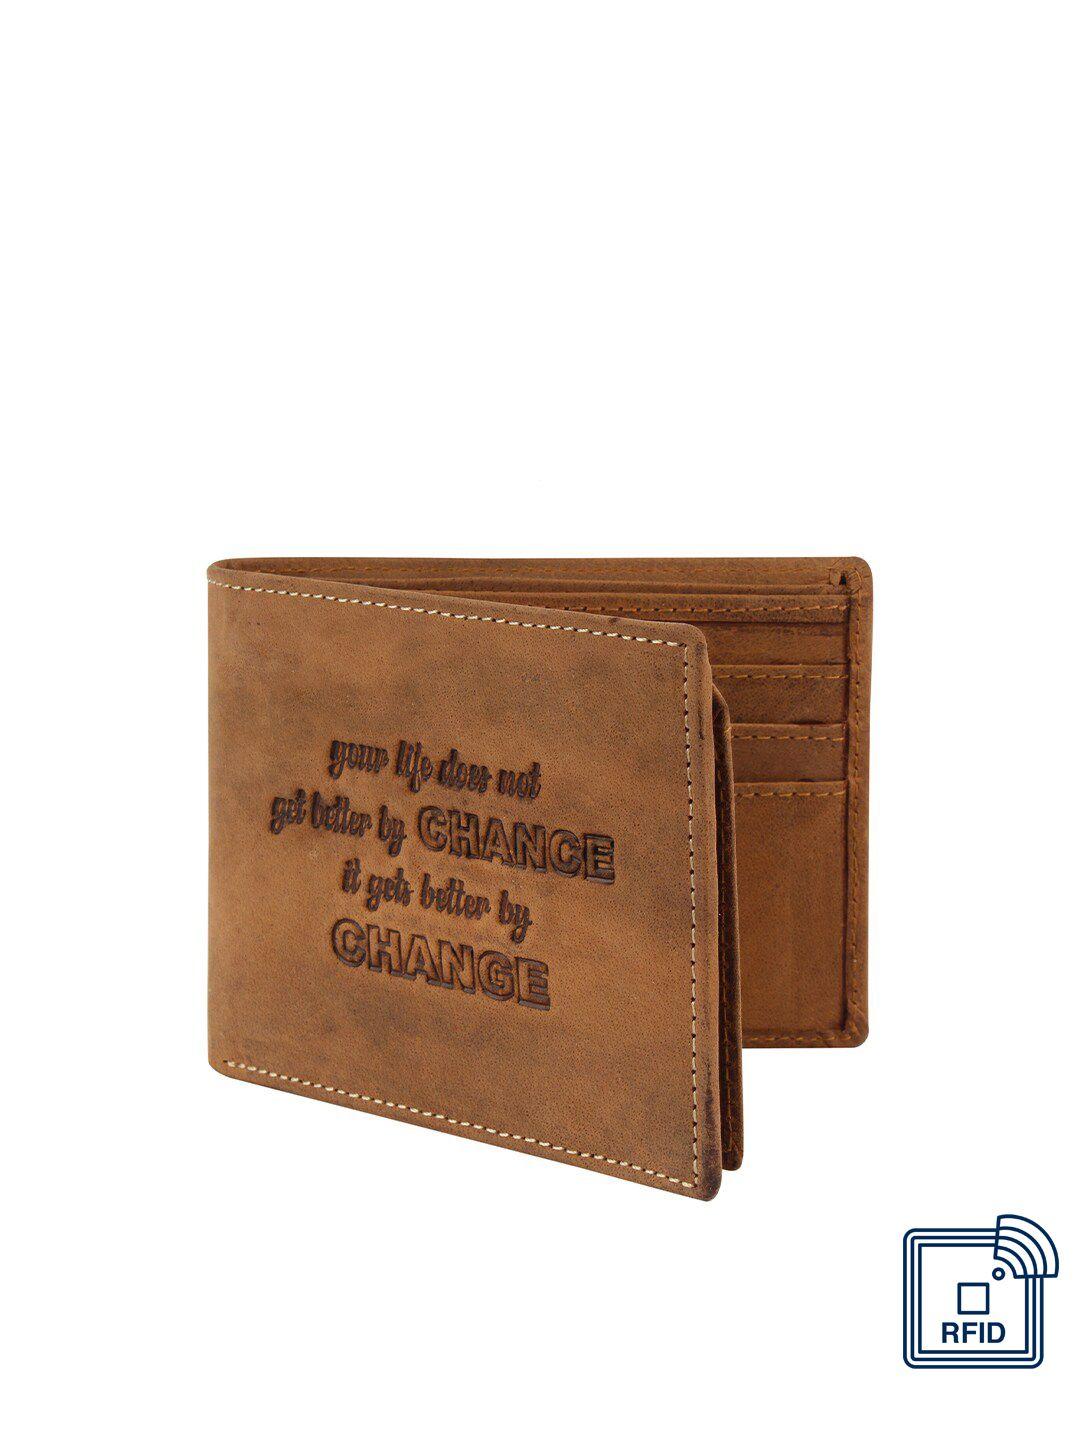 designer bugs men brown leather two fold wallet